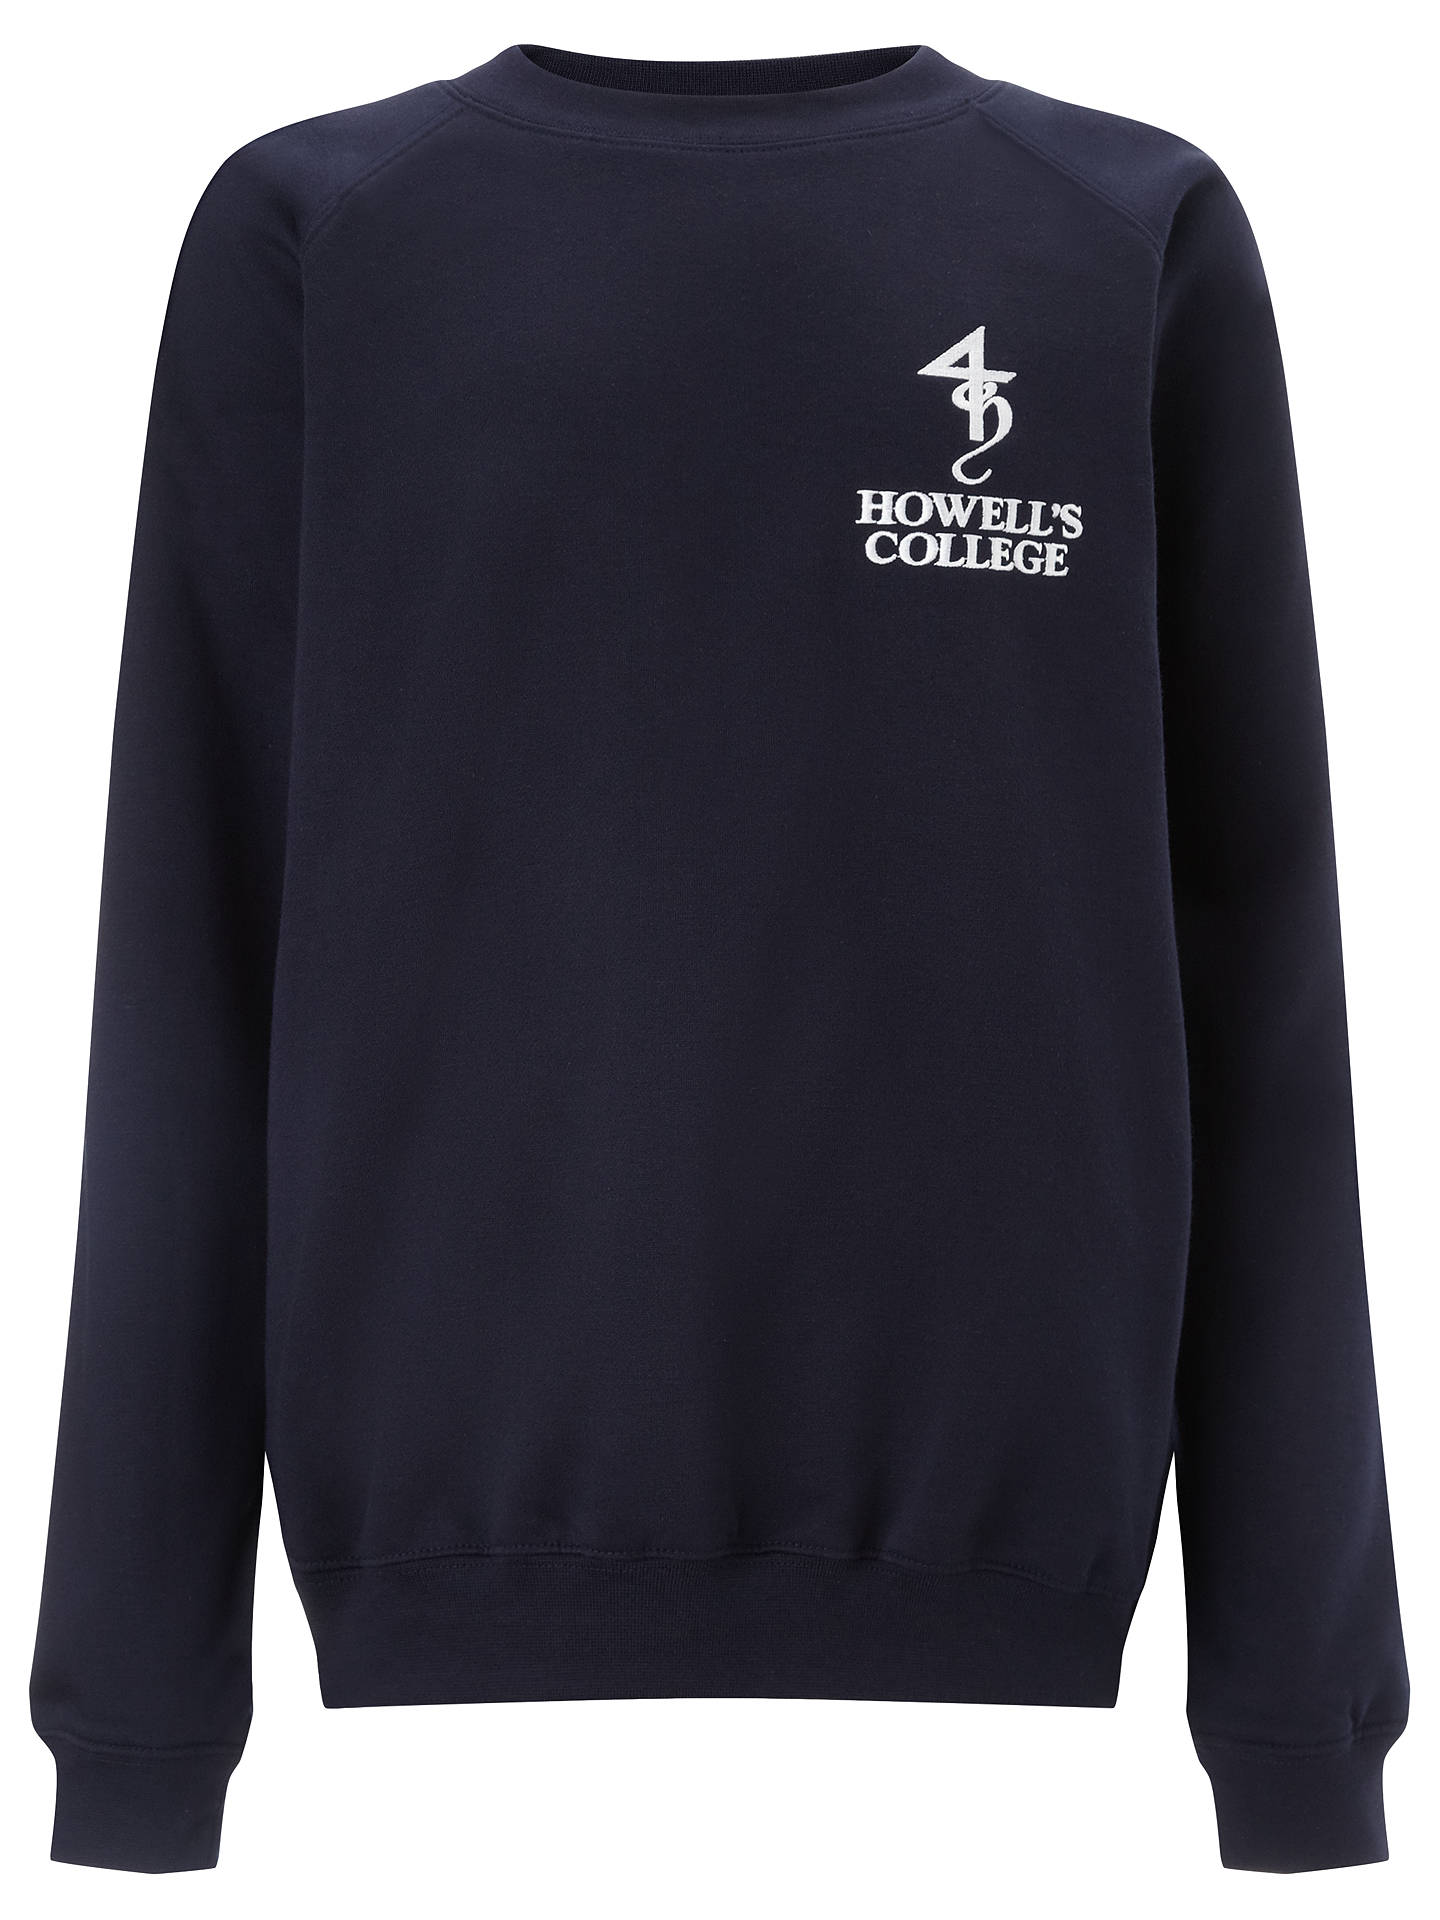 Howell's College Unisex Sweatshirt, Navy Blue at John Lewis & Partners